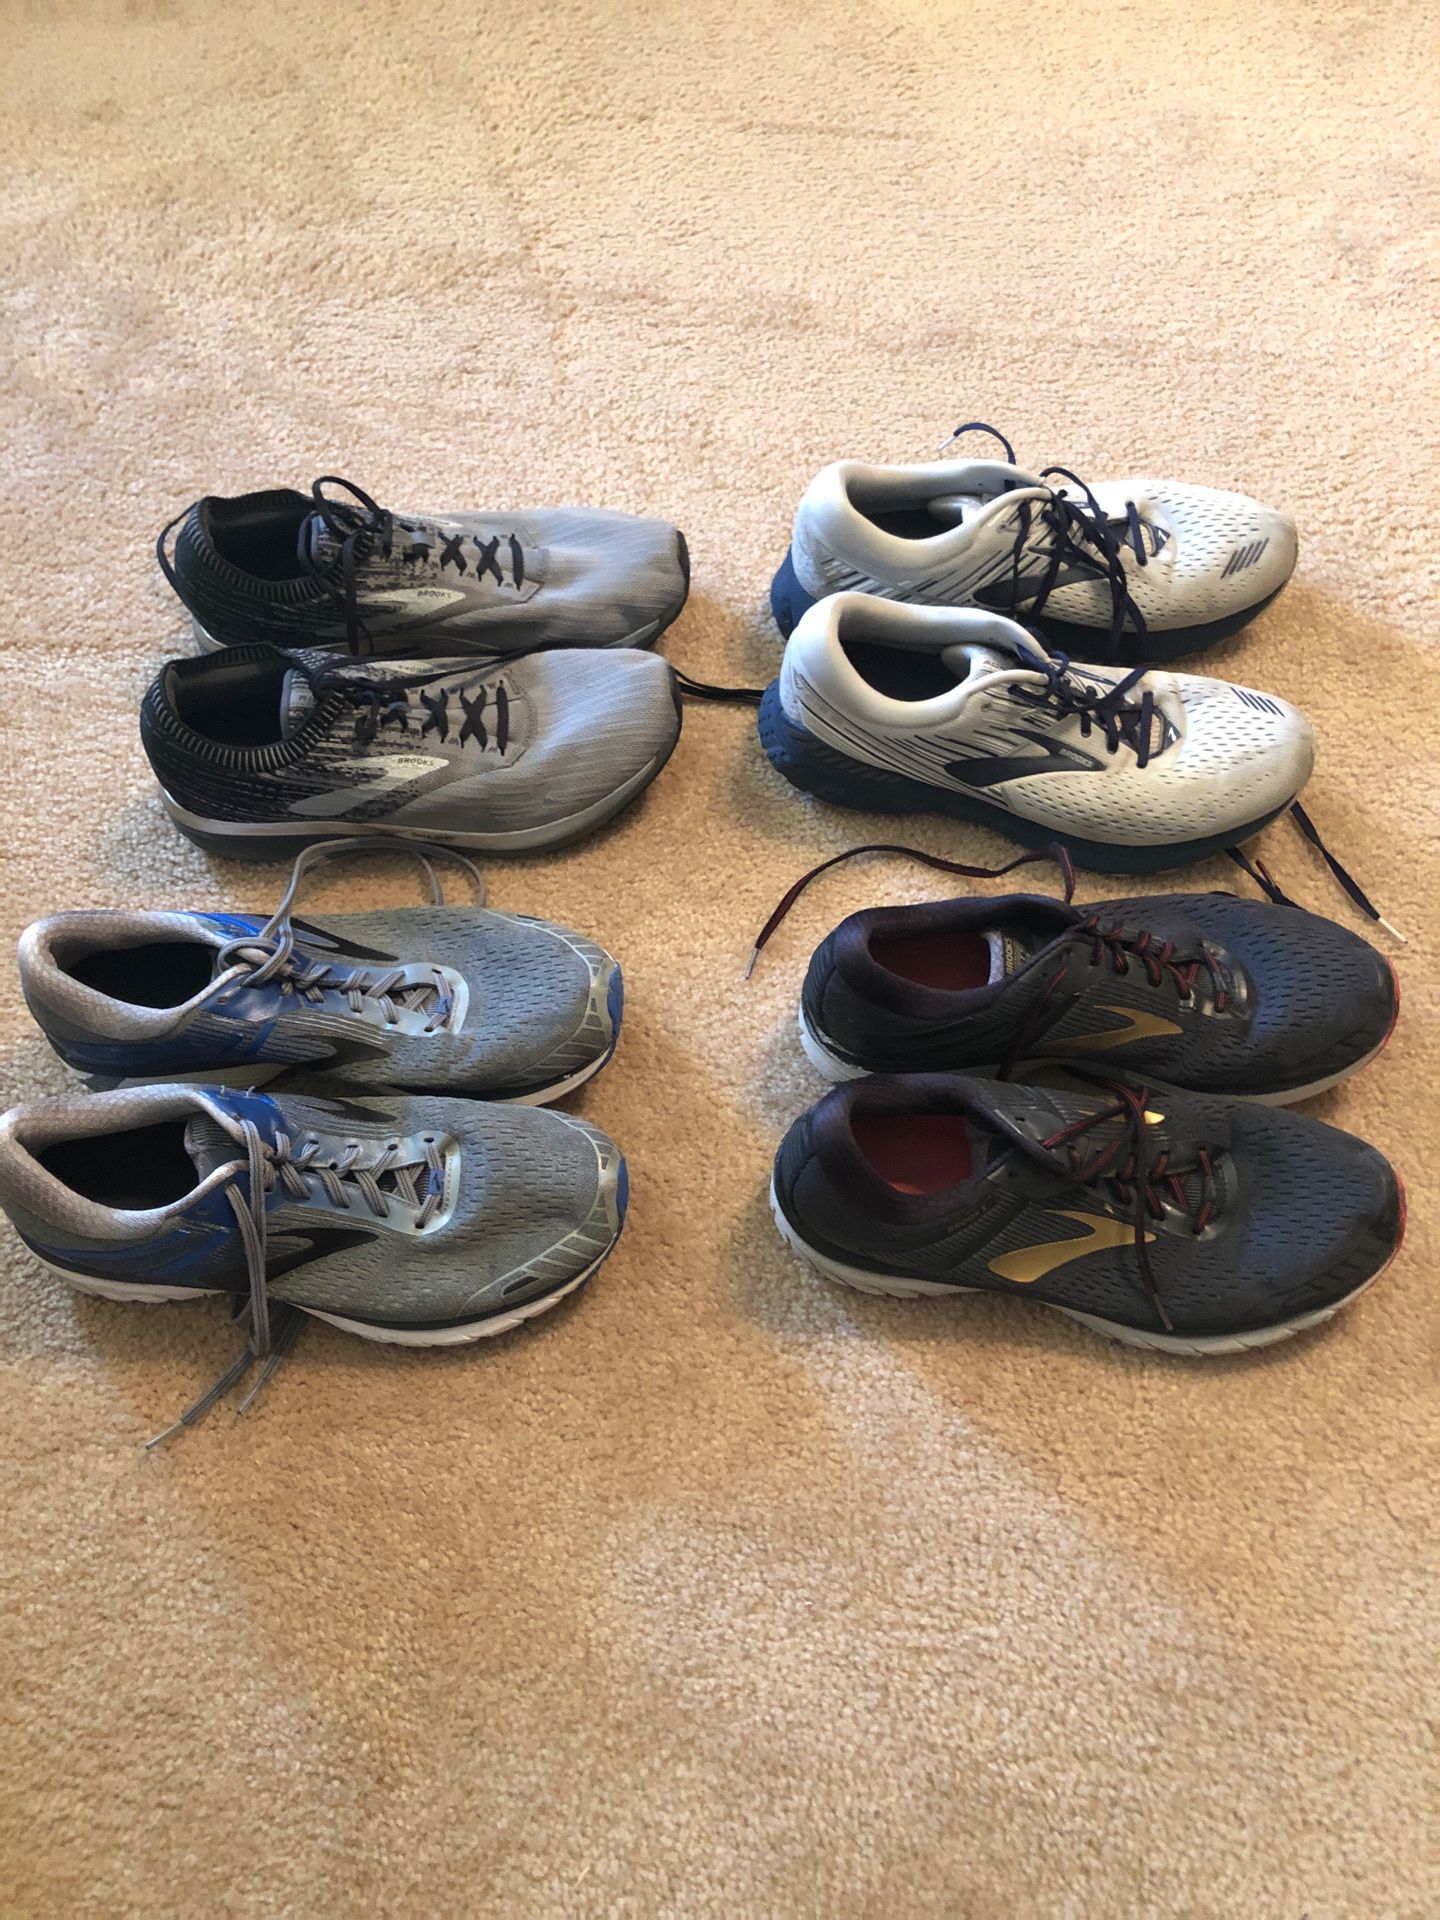 Brooks Adrenaline running shoes - men’s size 12